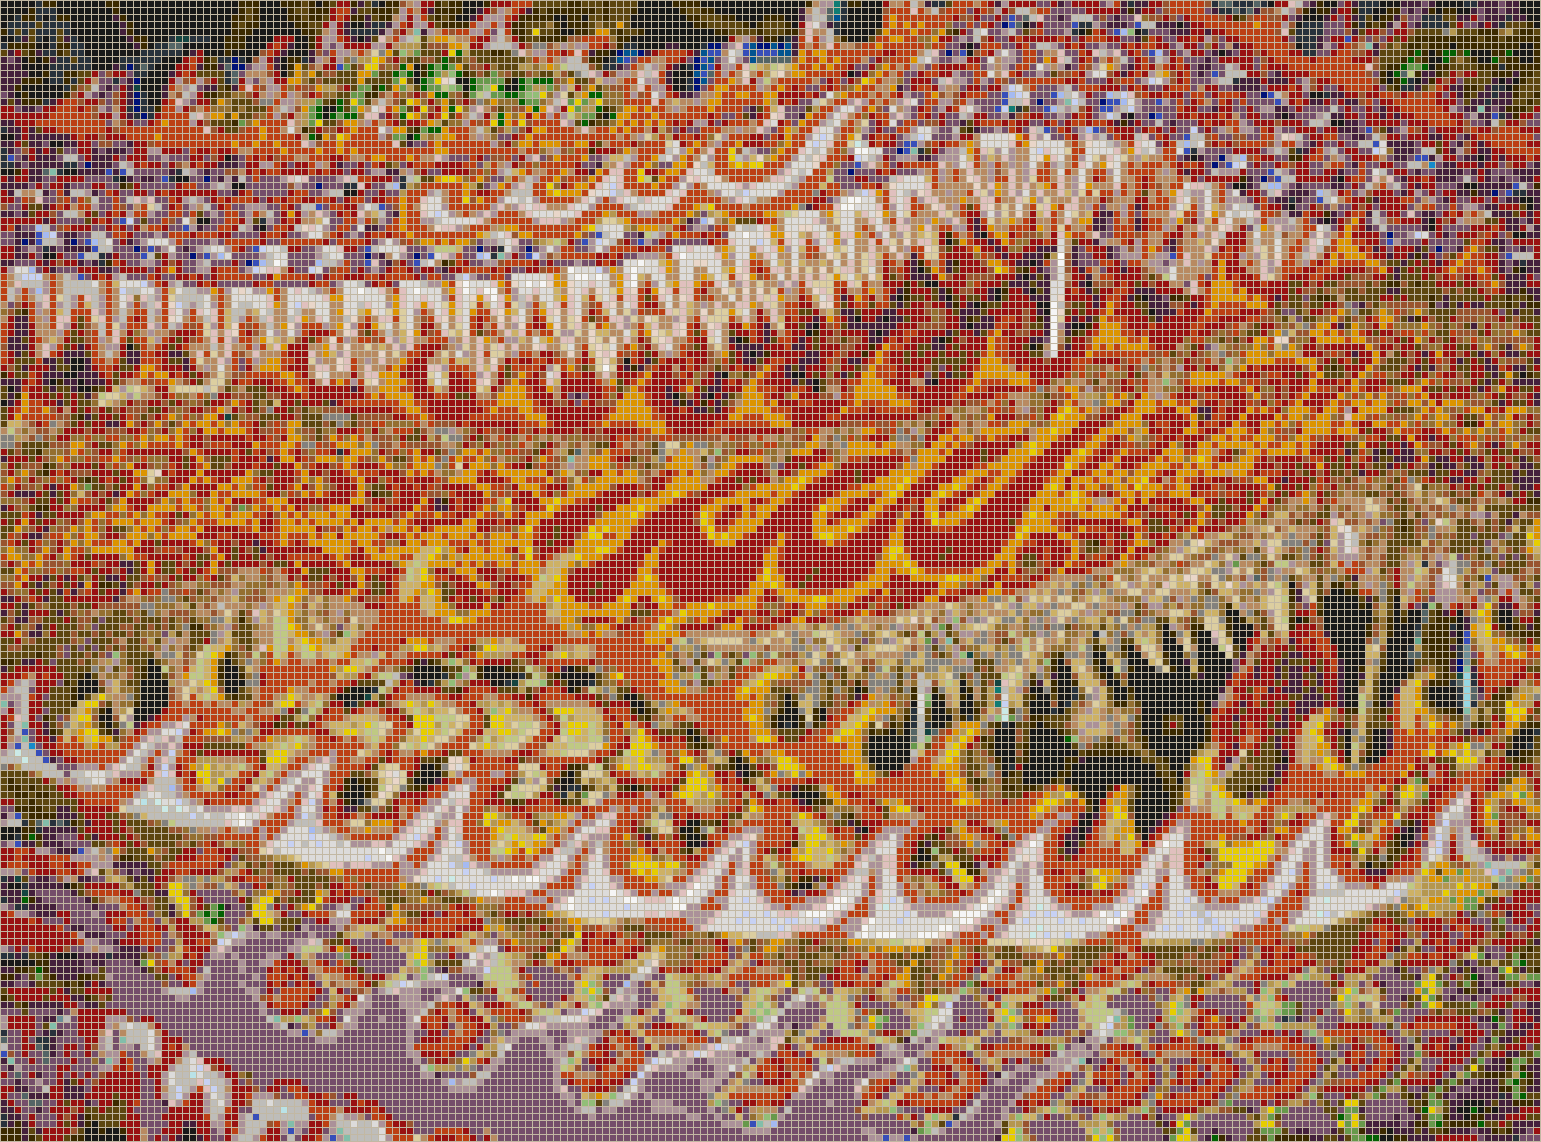 Singapore Dragons - Mosaic Tile Picture Art